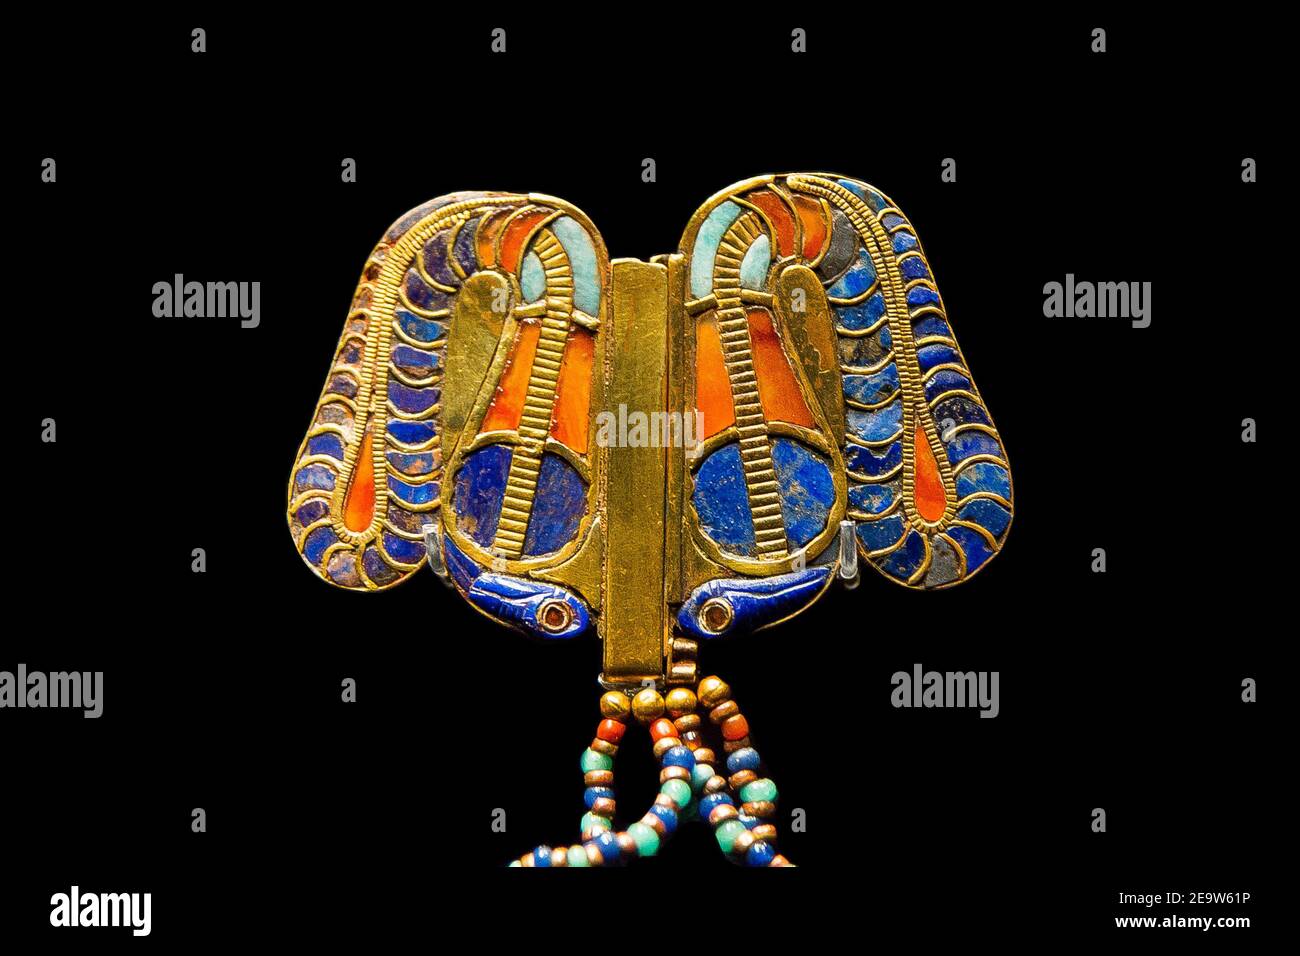 Ägypten, Kairo, Tutanchamon Schmuck : Verschluss eines komplexen flexiblen Brustkorbs. Die Schlangen repräsentieren die Göttin Wadjet. Stockfoto